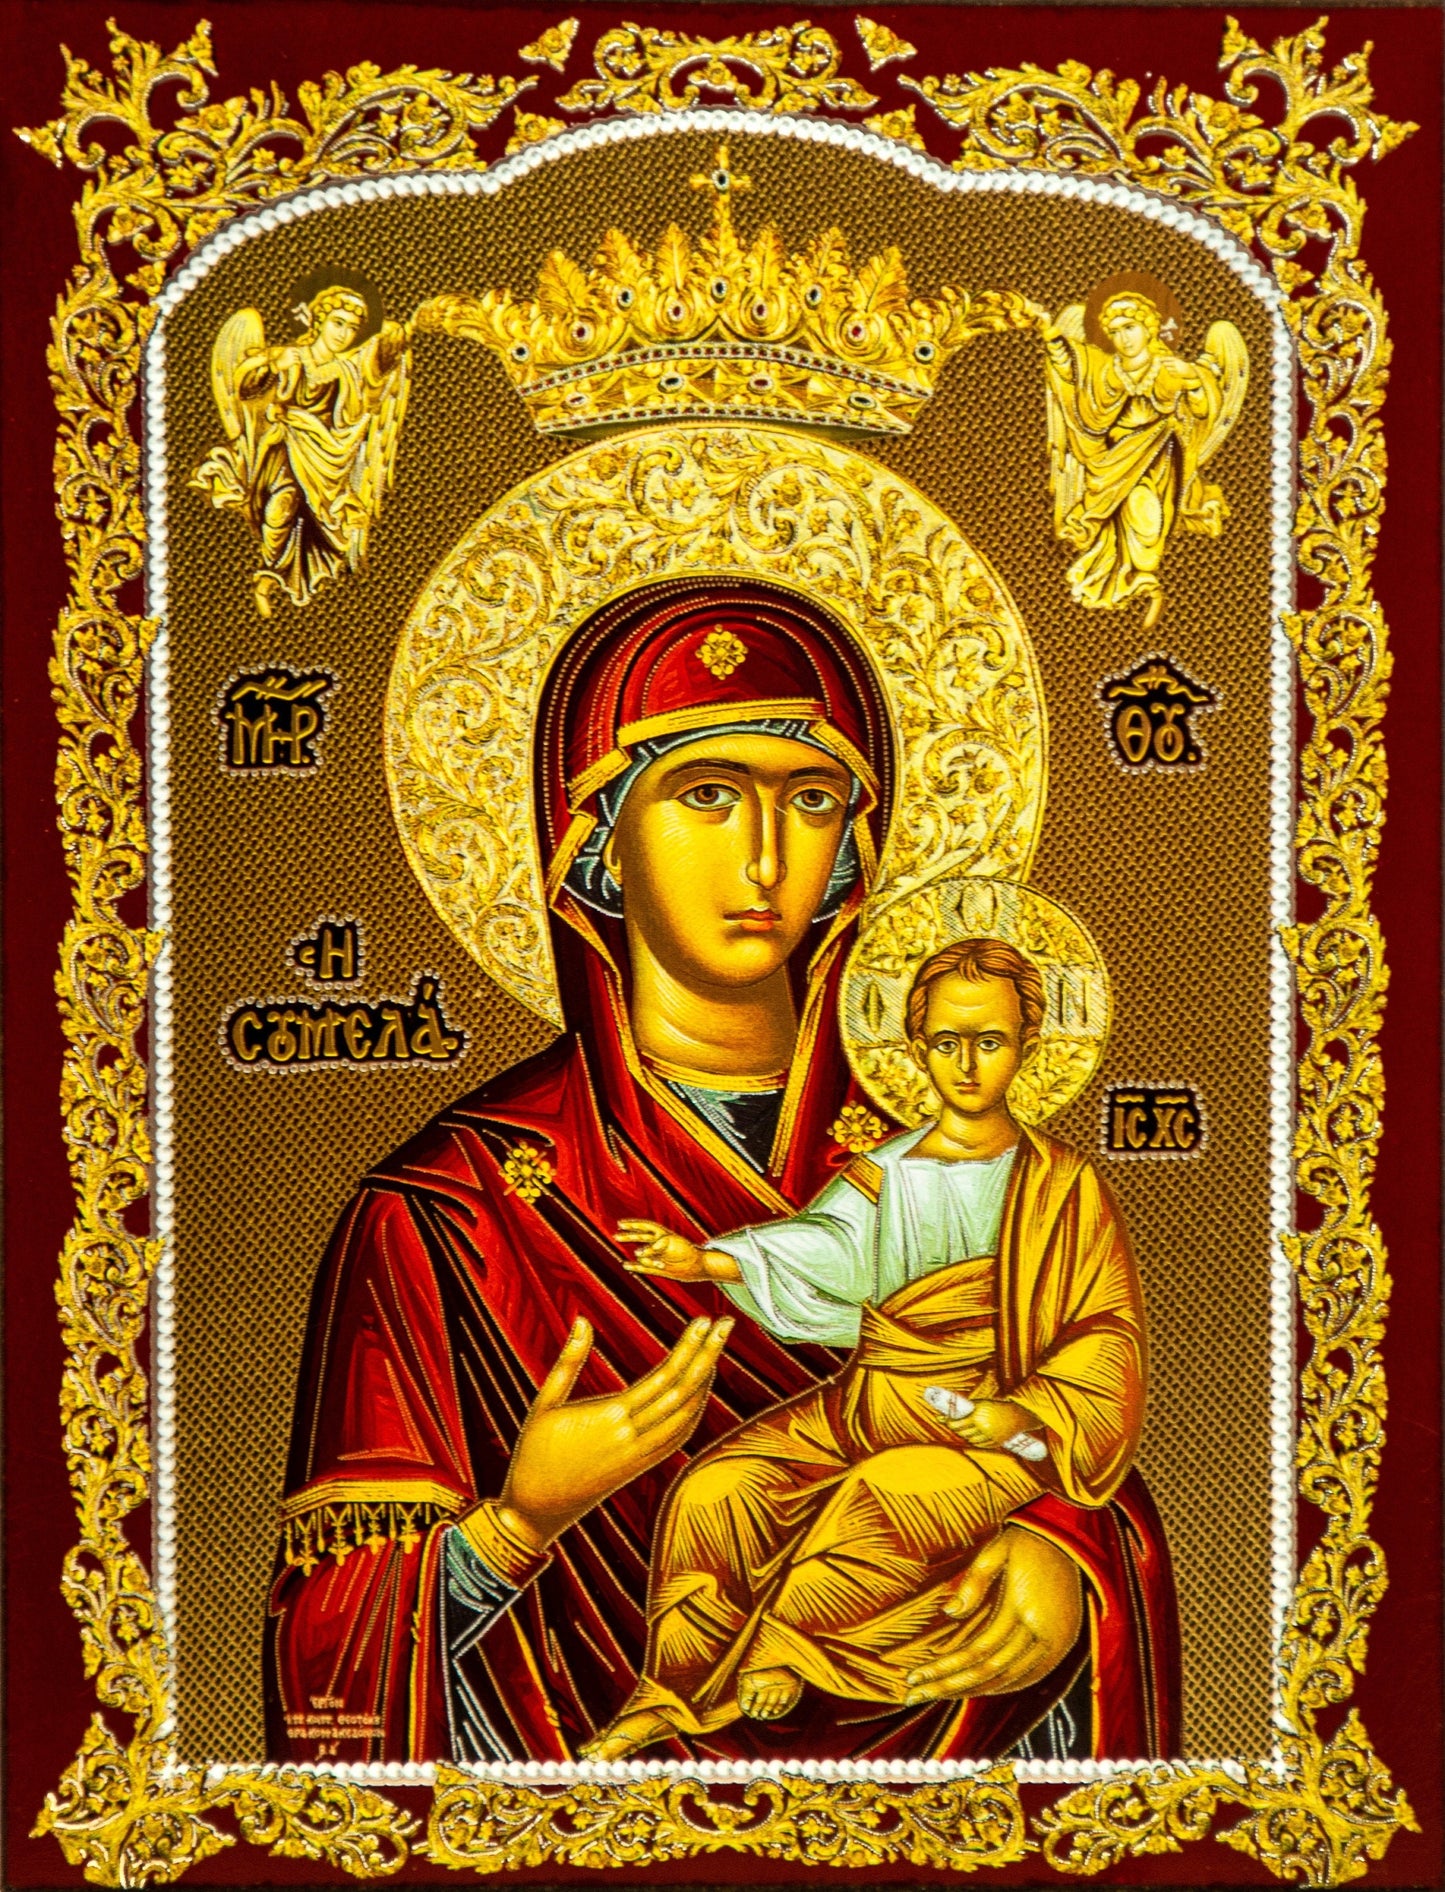 Virgin Mary icon Panagia Soumela, Handmade Greek Orthodox Icon, Mother of God Byzantine art wall hanging, Theotokos religious wood plaque TheHolyArt